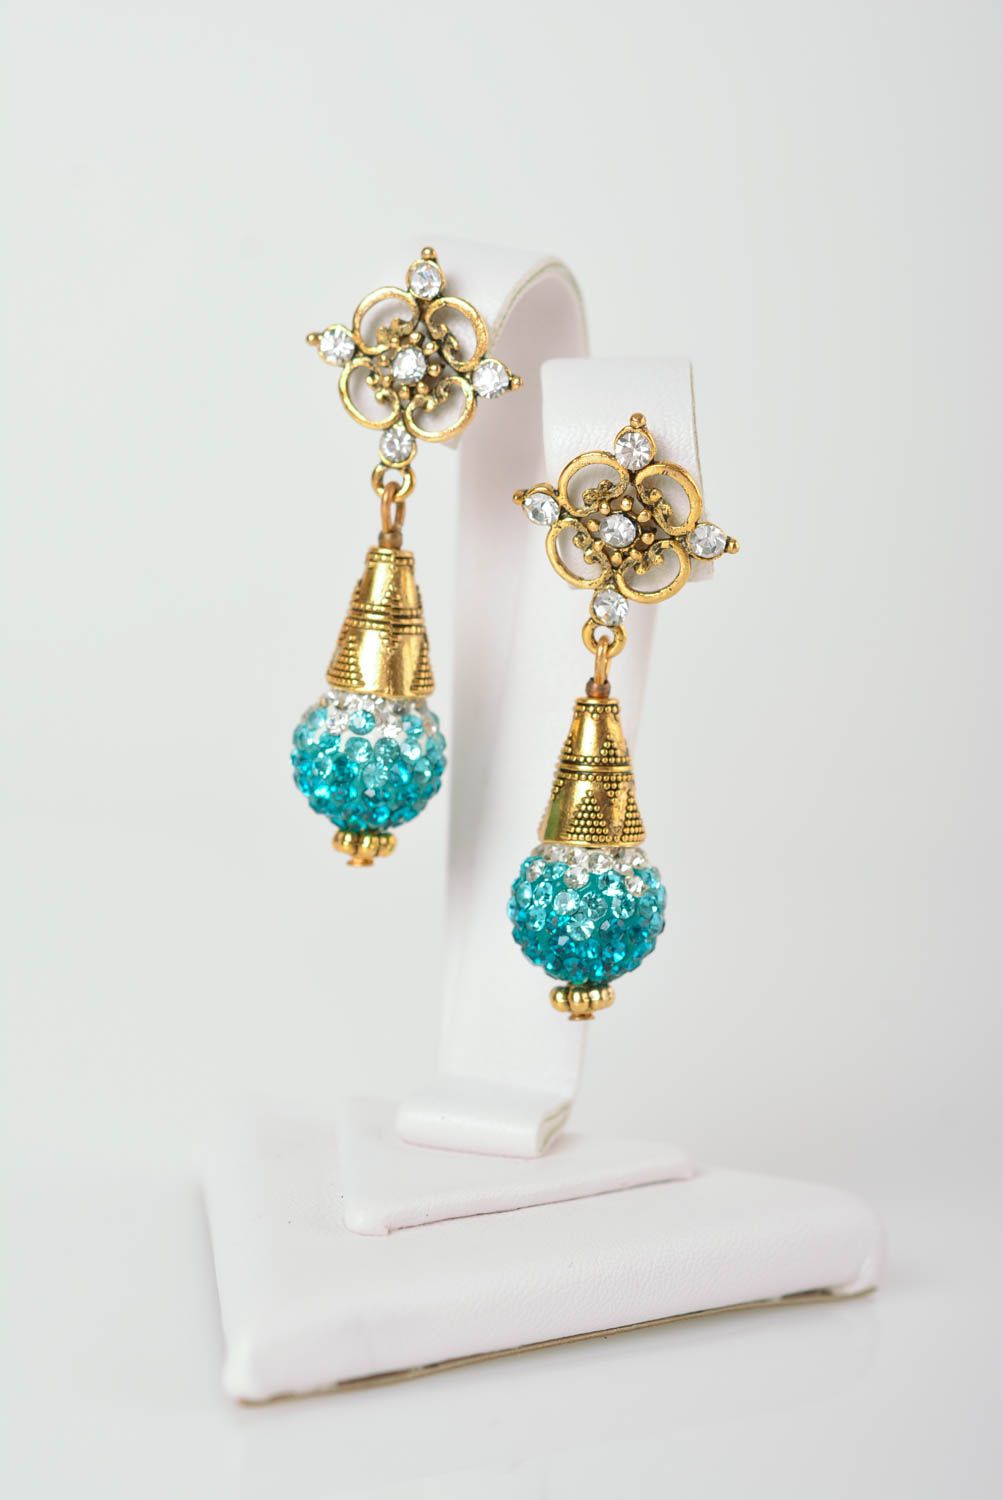 Handmade stylish cute earrings designer elegant earrings beautiful accessory photo 1